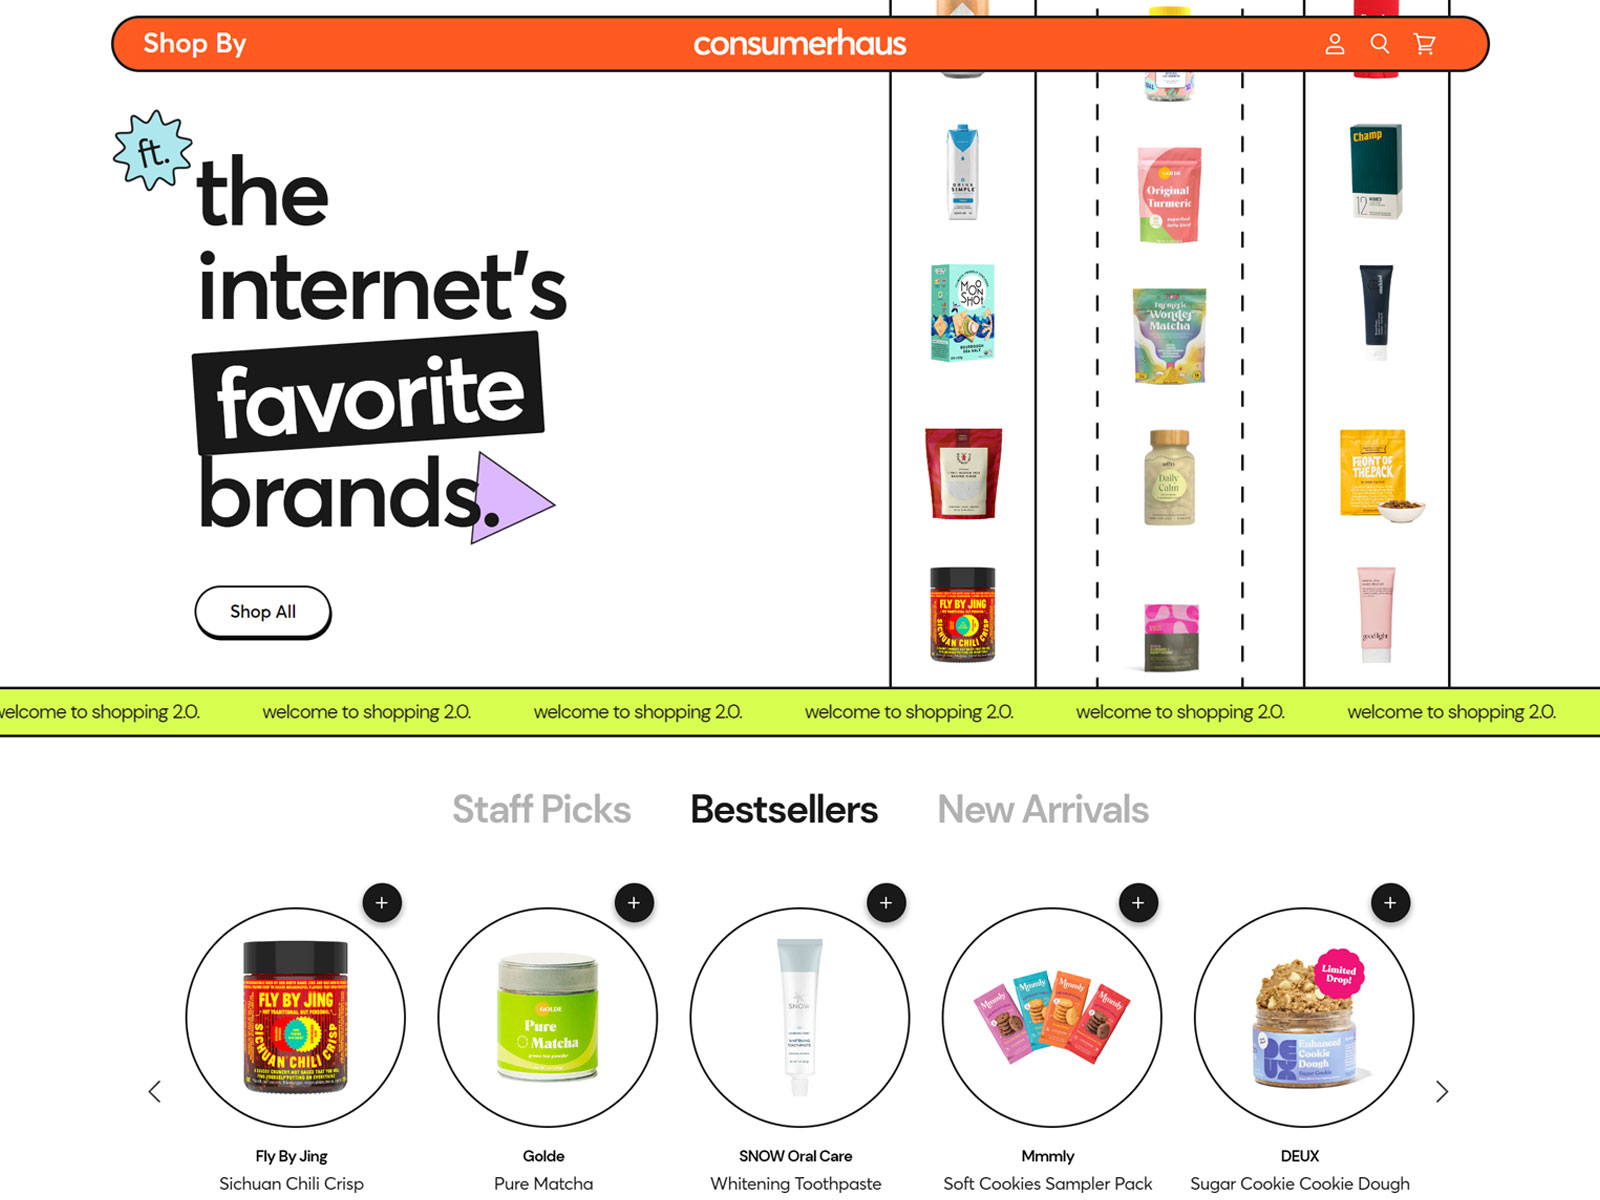 Consumerhaus ft. the internet's favorite brands